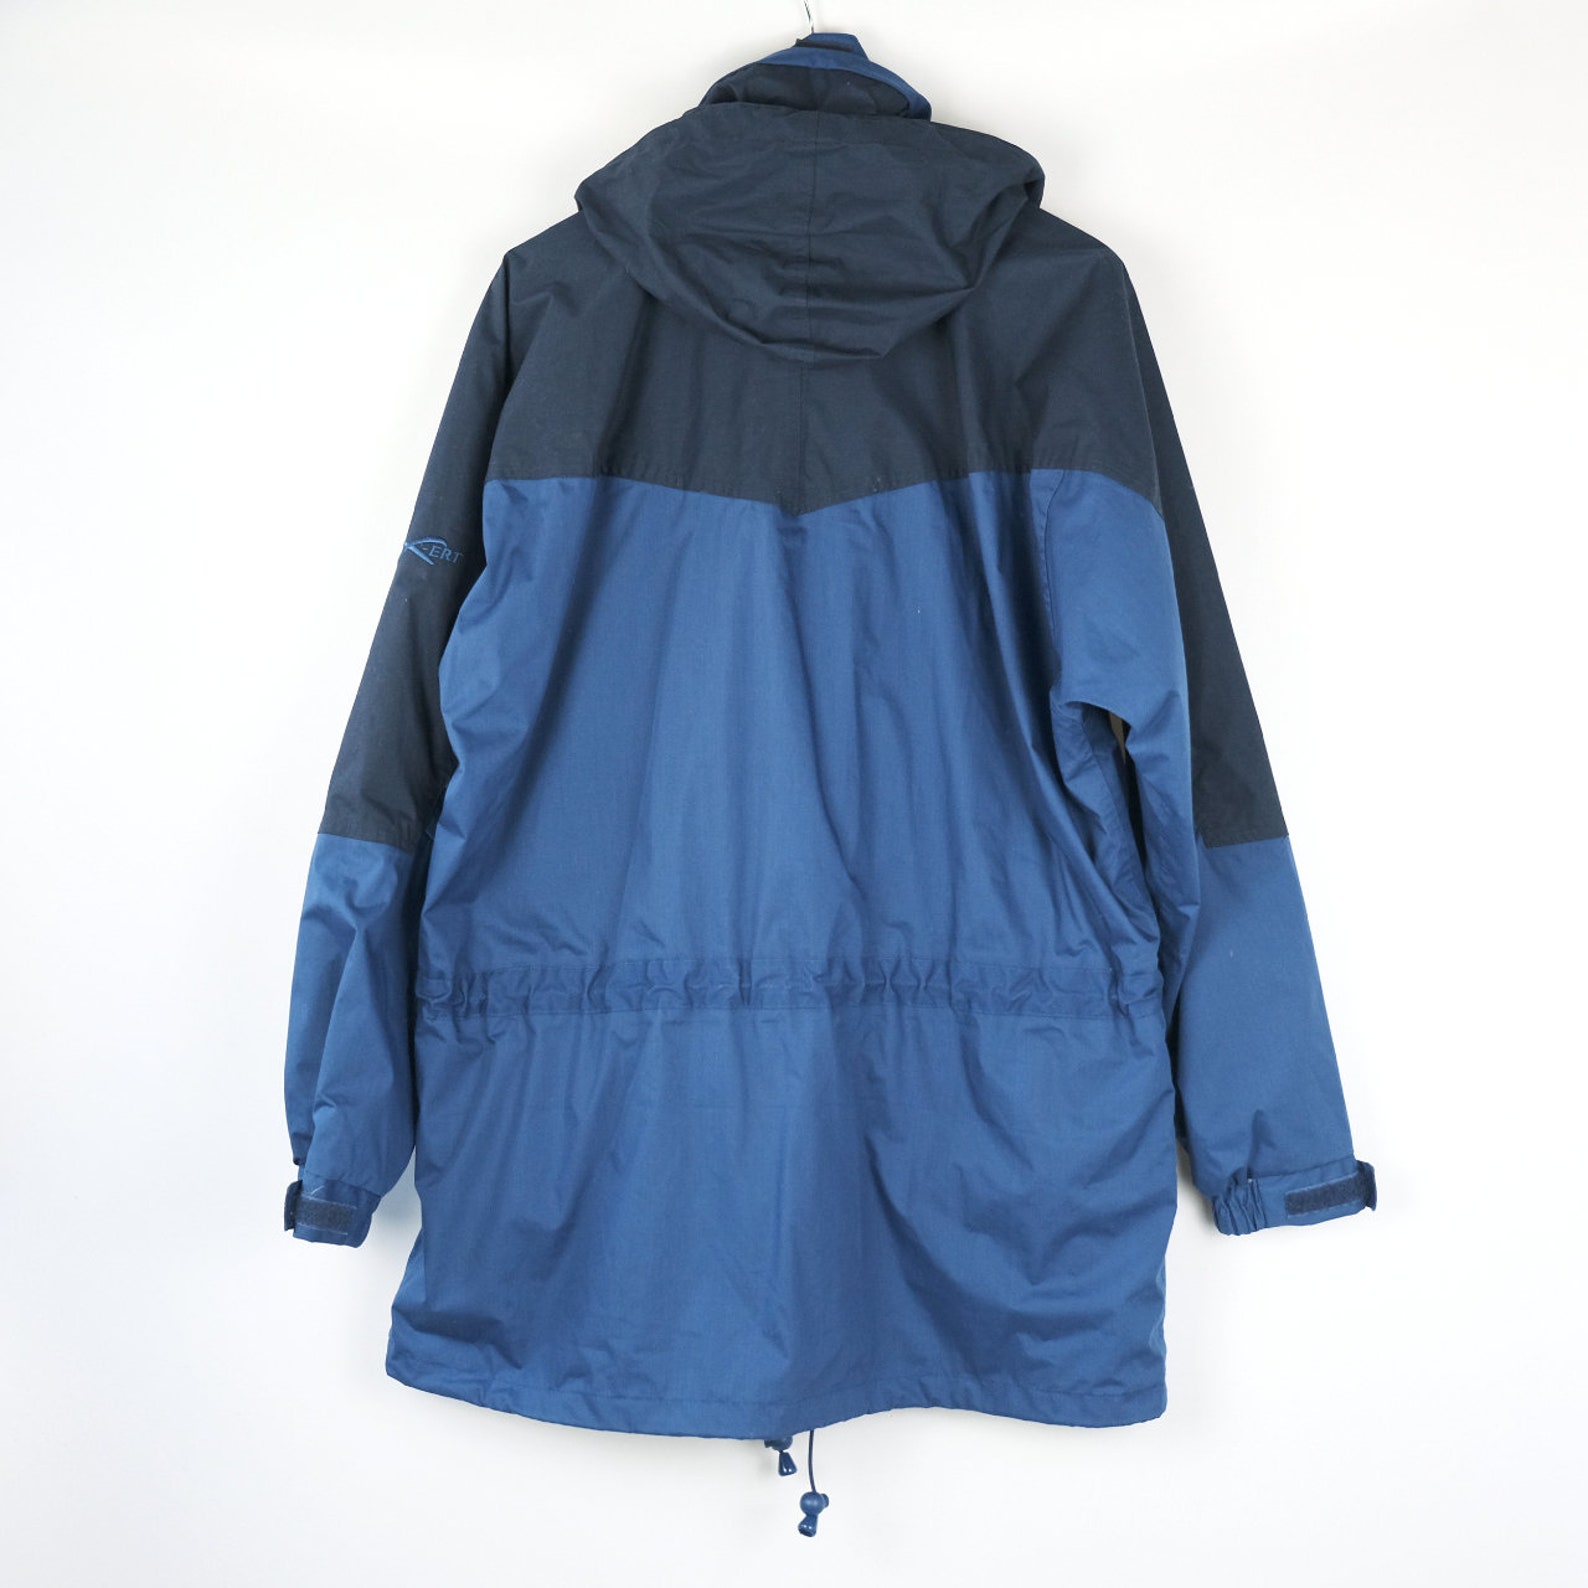 Vintage Regatta X-ert waterproof blue jacket / rain coat Large | Etsy